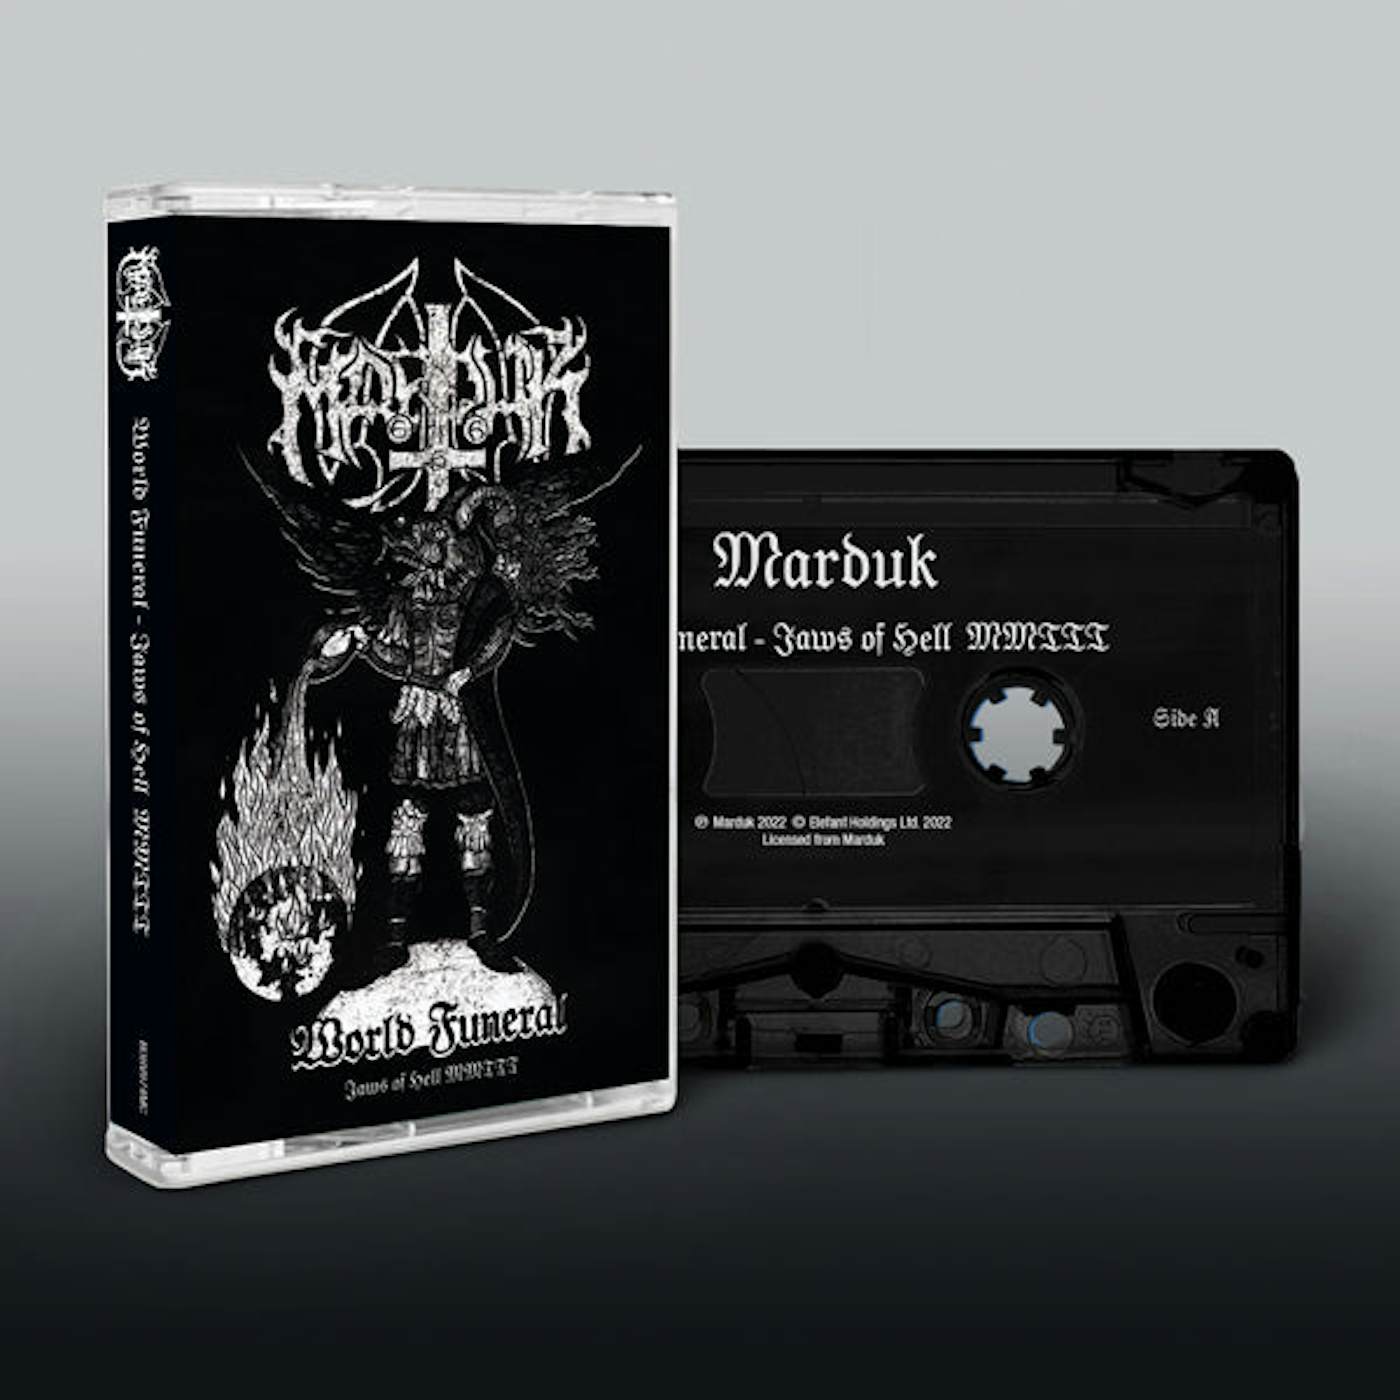 Marduk Music Cassette - World Funeral Jaws Of Hell Mmiii